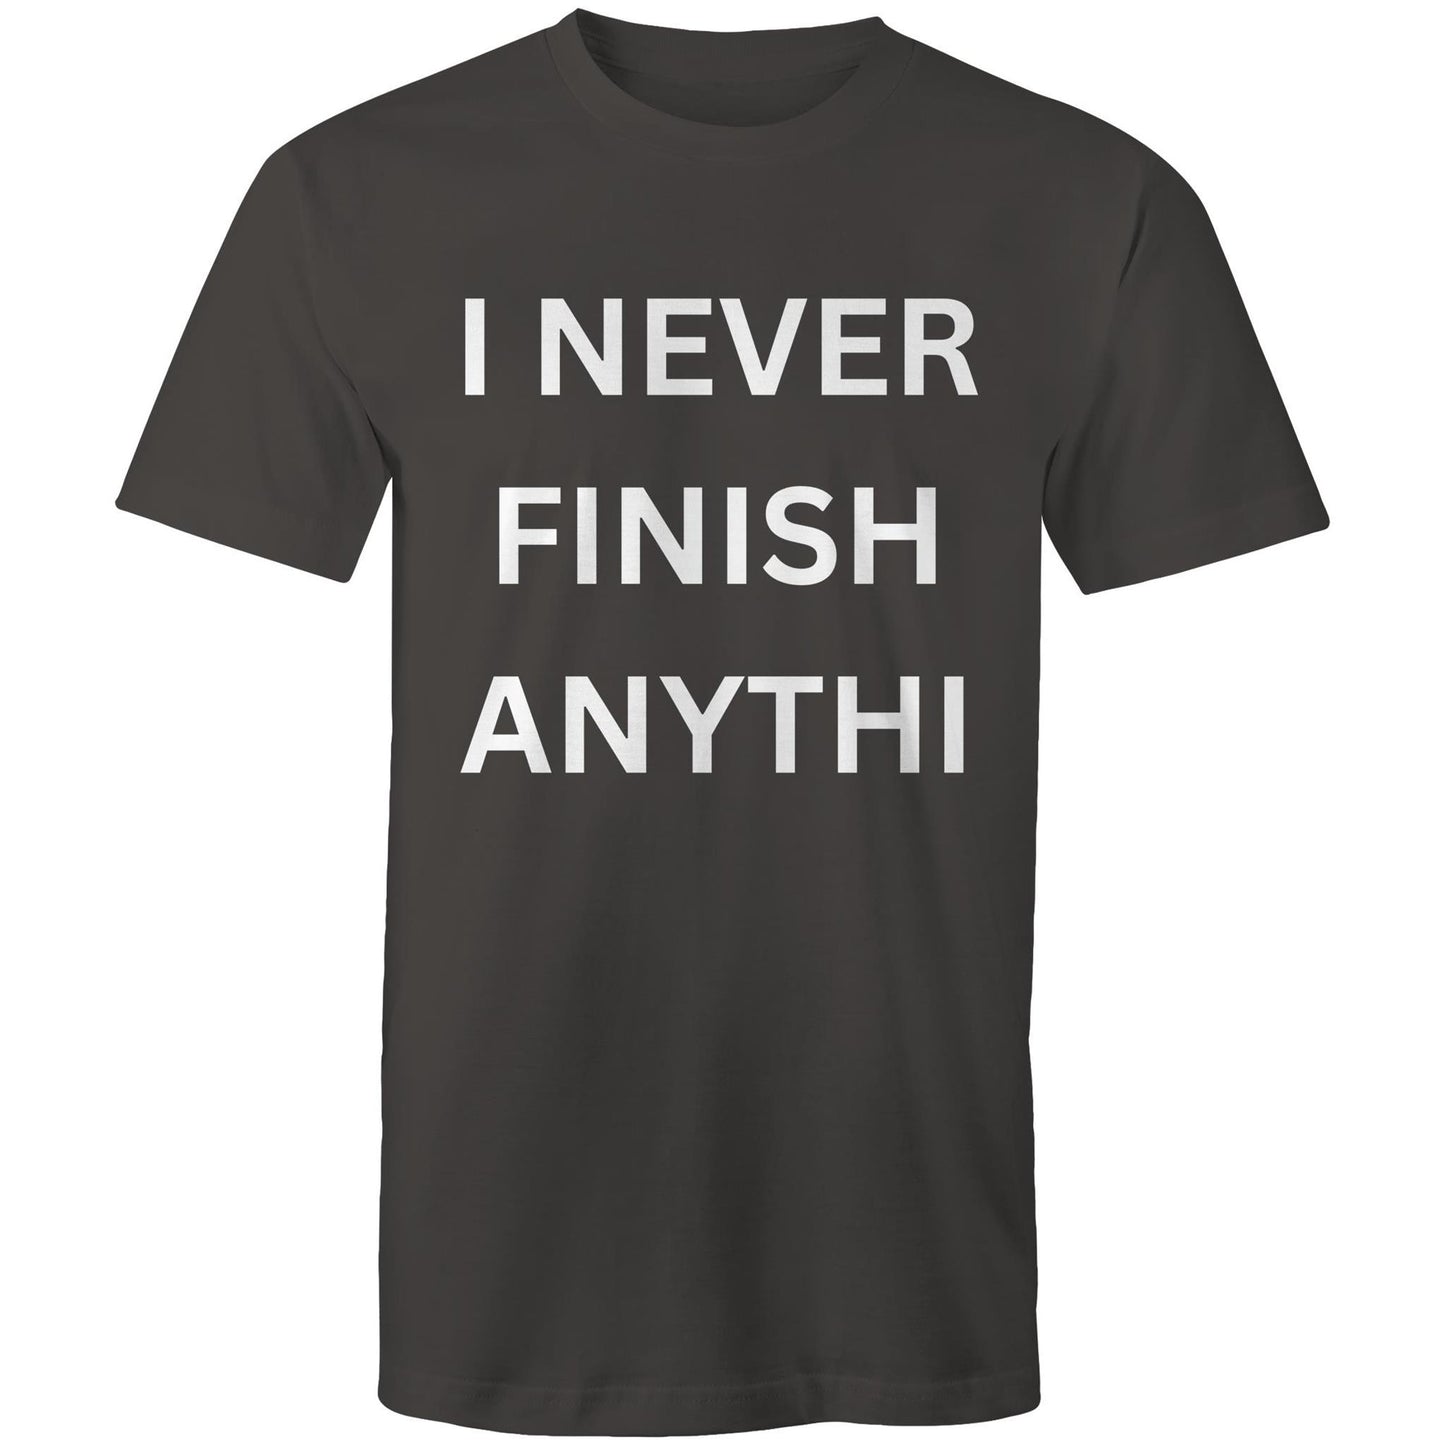 I NEVER FINISH ANYTHI - Mens T-Shirt